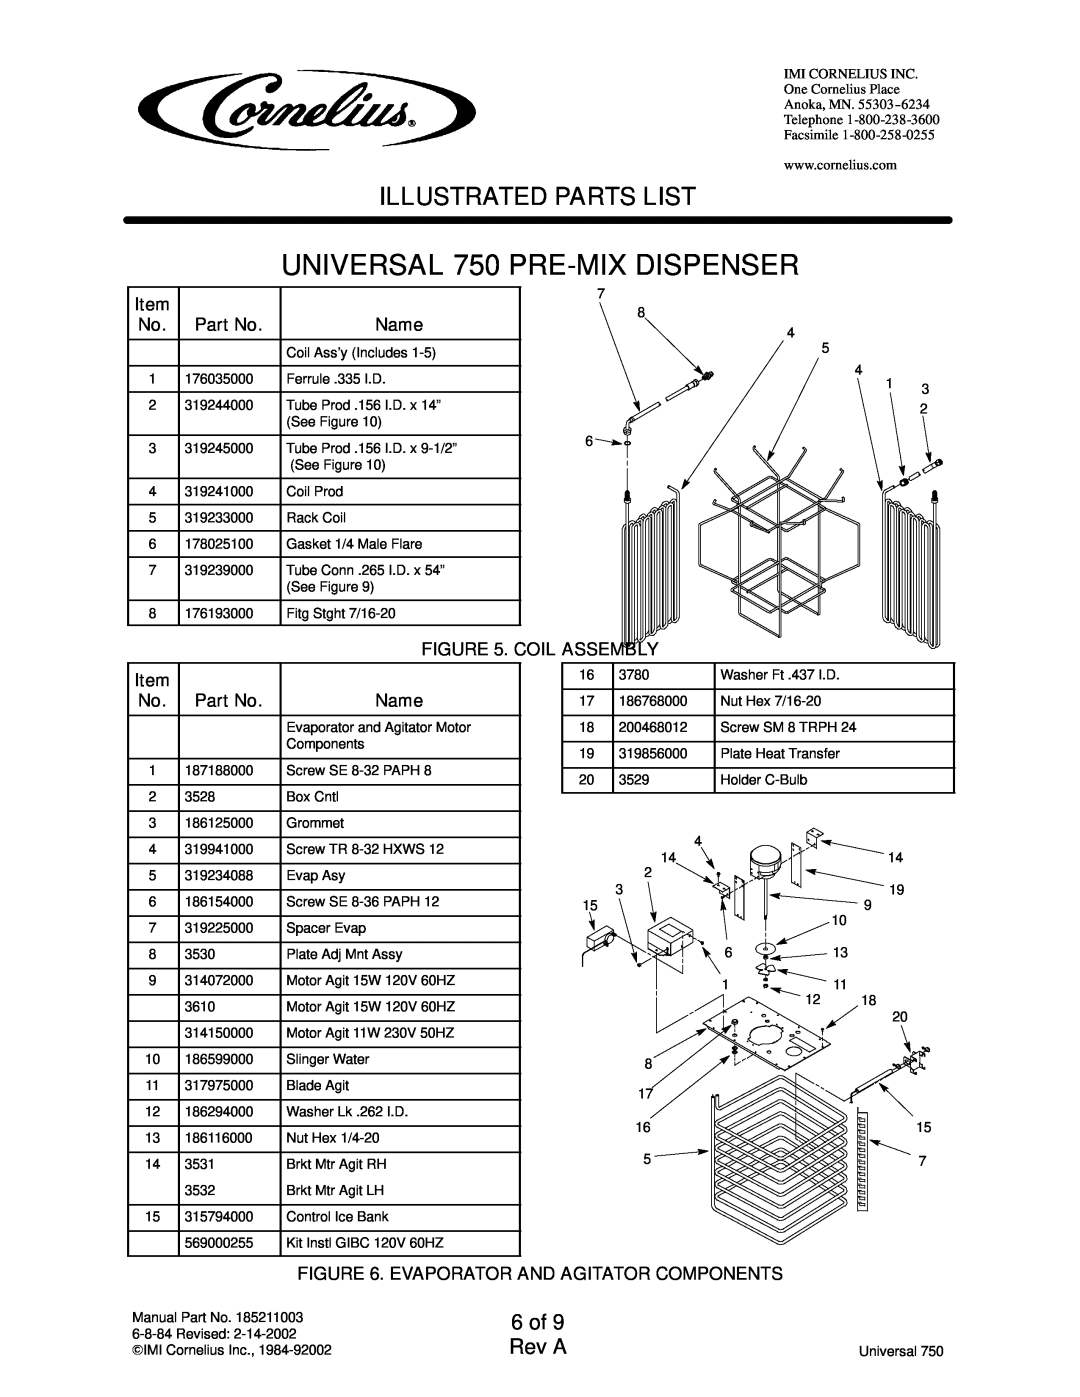 Cornelius 2849959xxx, 2849949xxx manual 6 of 9 Rev A, UNIVERSAL 750 PRE-MIXDISPENSER, Illustrated Parts List 